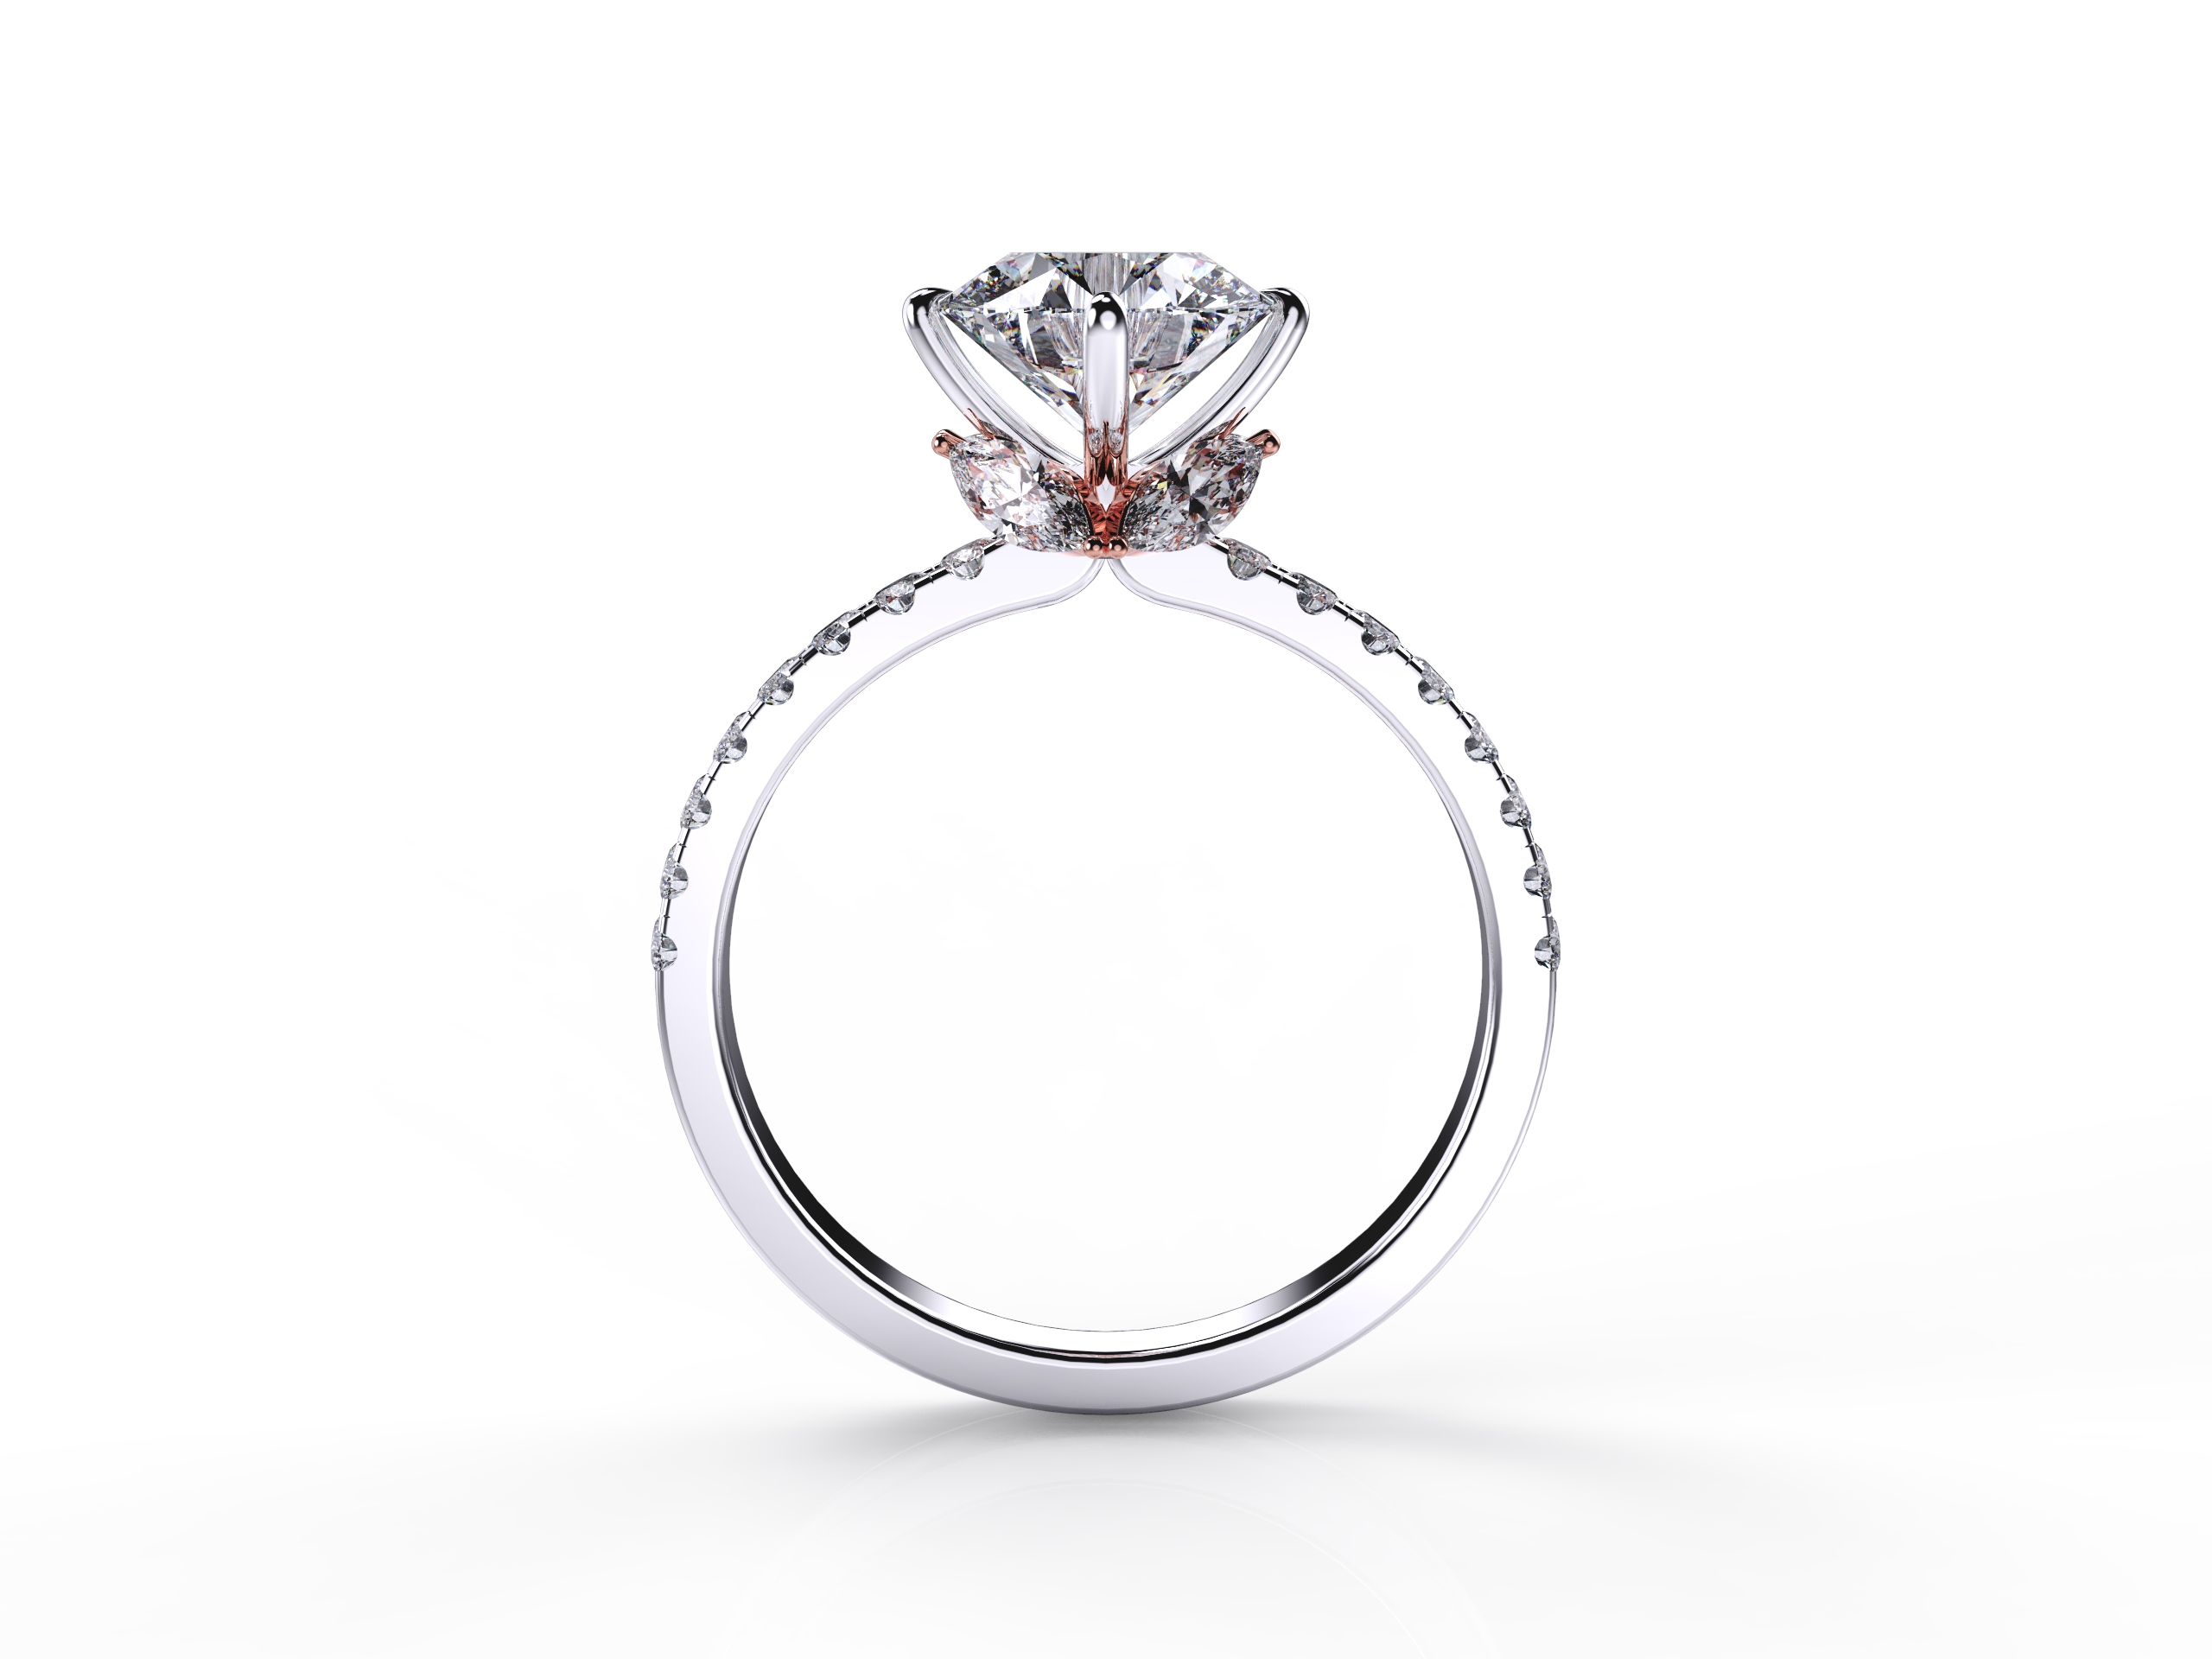 Enchanted Pave Diamond Ring